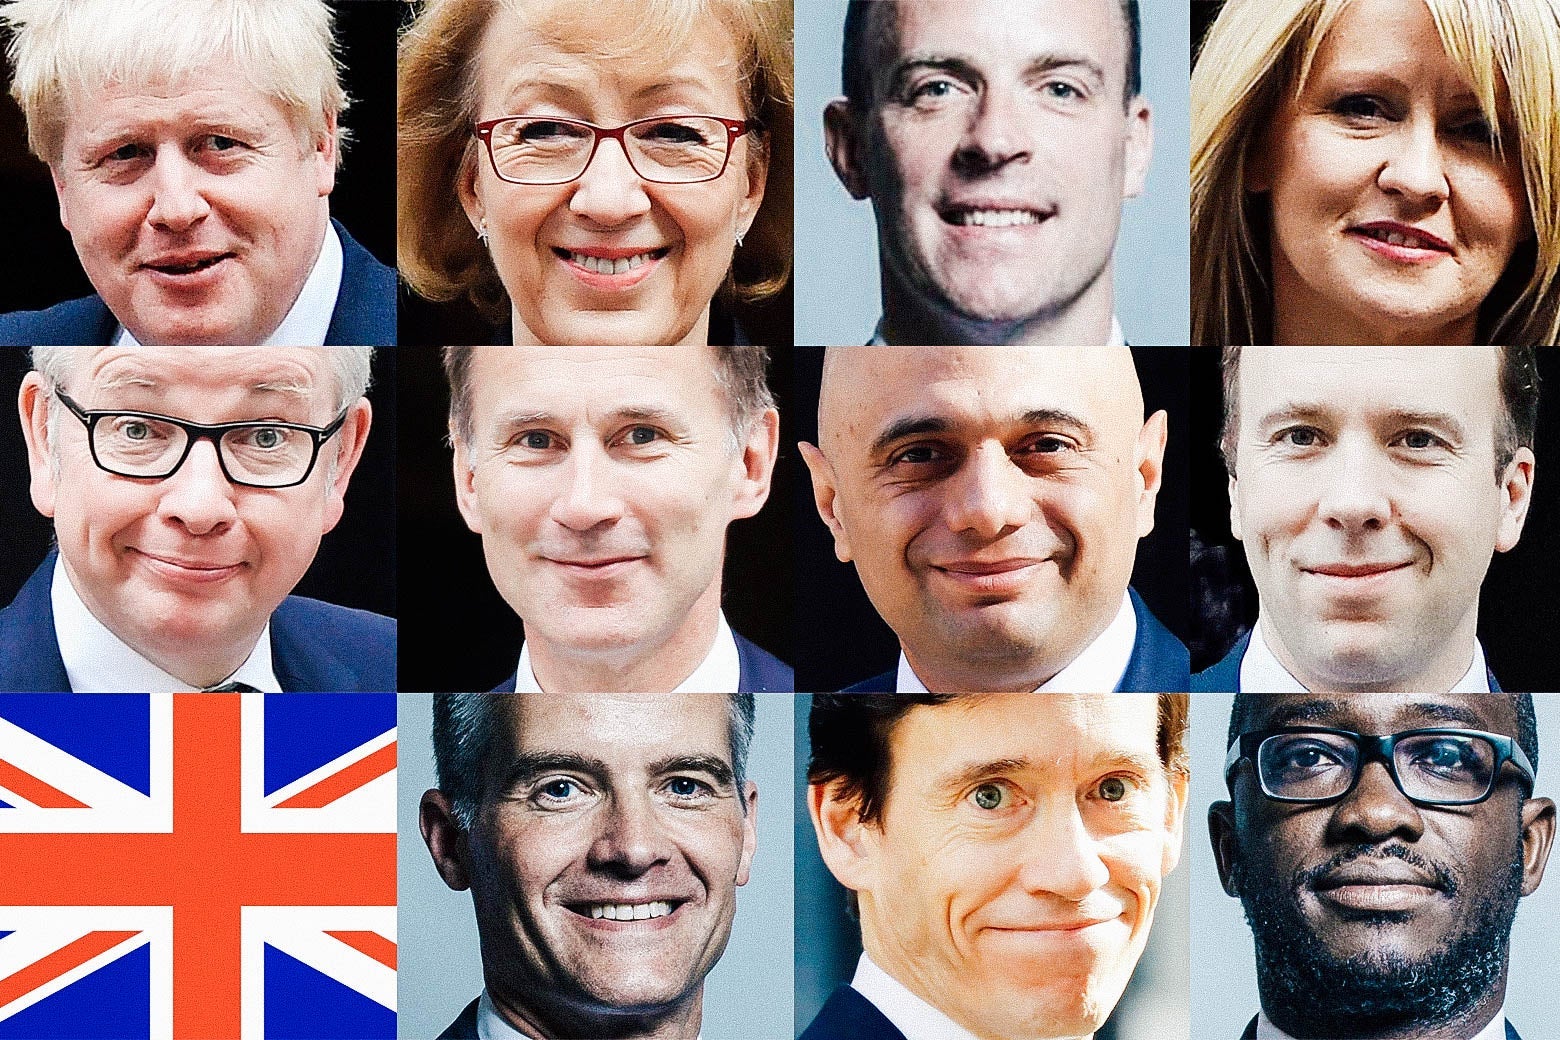 Boris Johnson, Andrea Leadsom, Dominic Raab, Esther McVey, Michael Gove, Jeremy Hunt, Sajid Javid, Matt Hancock, a British flag, Mark Harper, Rory Stewart, and Sam Gyimah.